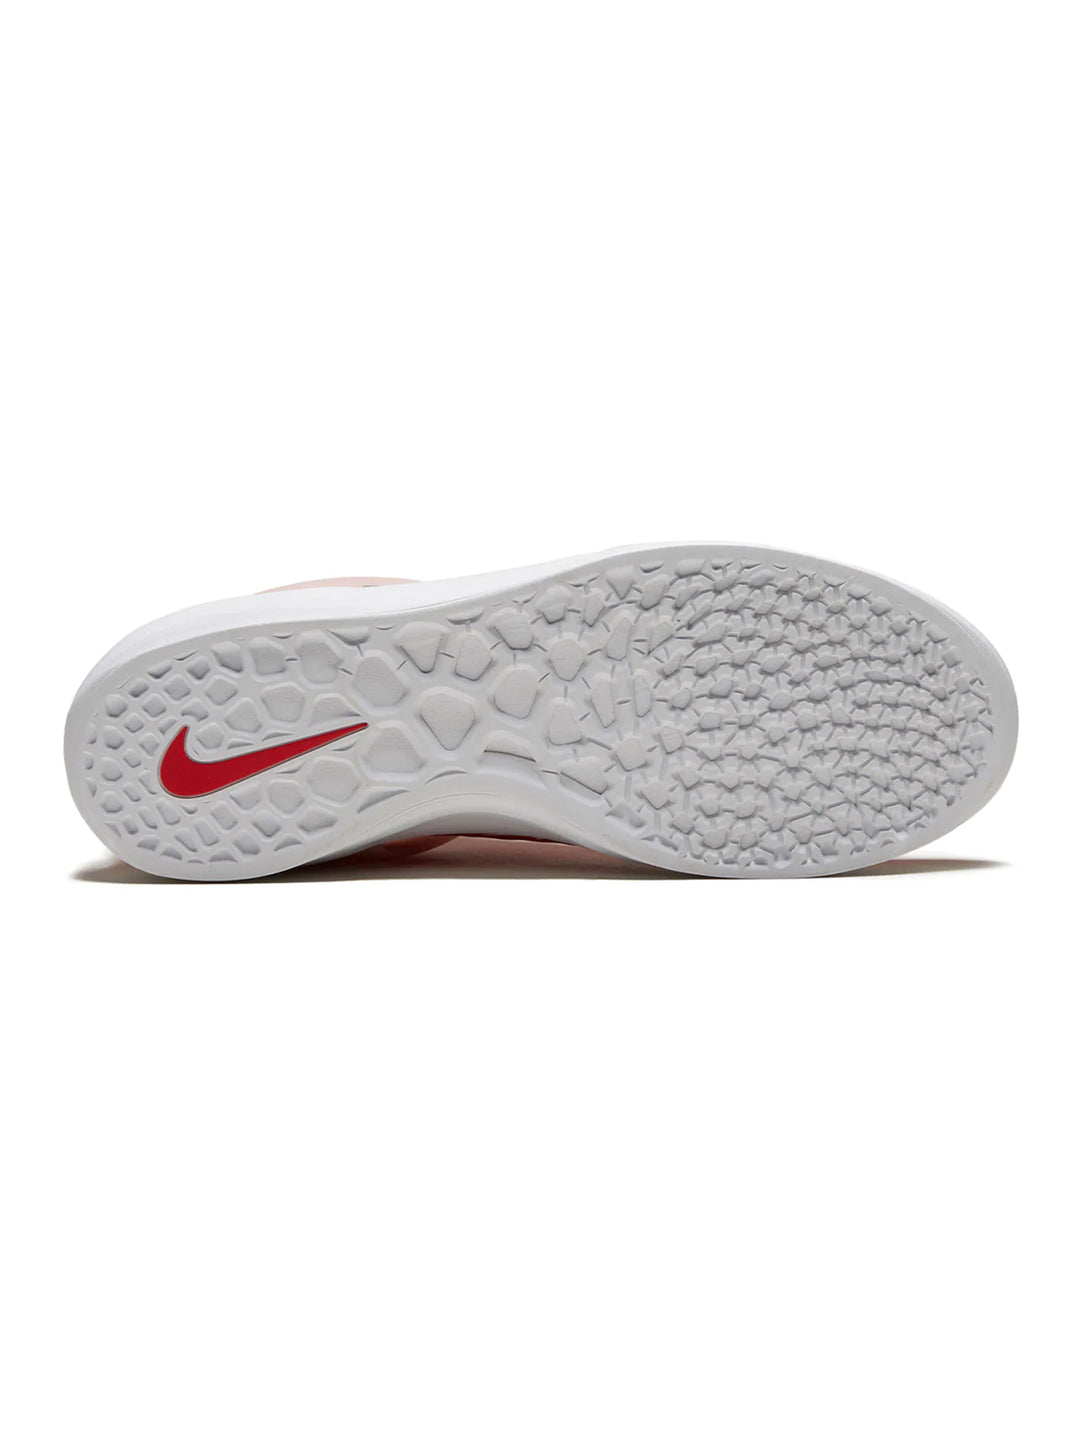 Nike SB Zoom Nyjah 3 - University Red / White